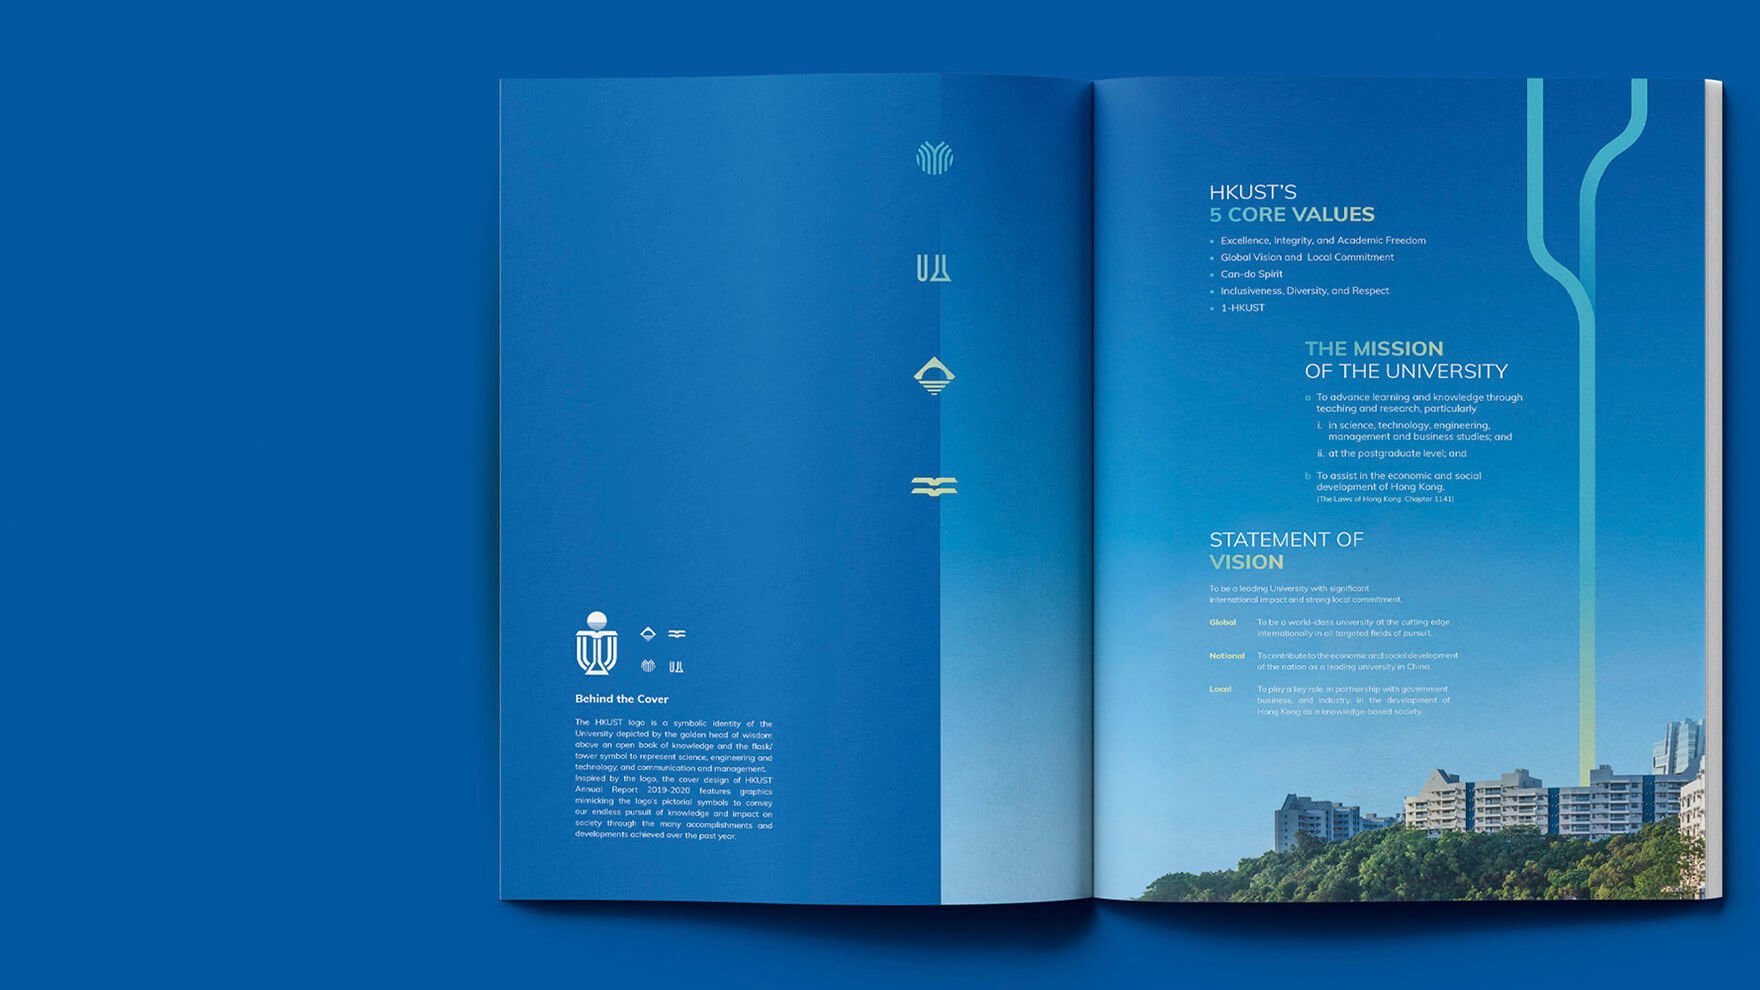 Branding Agency Hong Kong_HKUST_Annual Report Design 2020_CheddarMedia_07_1760